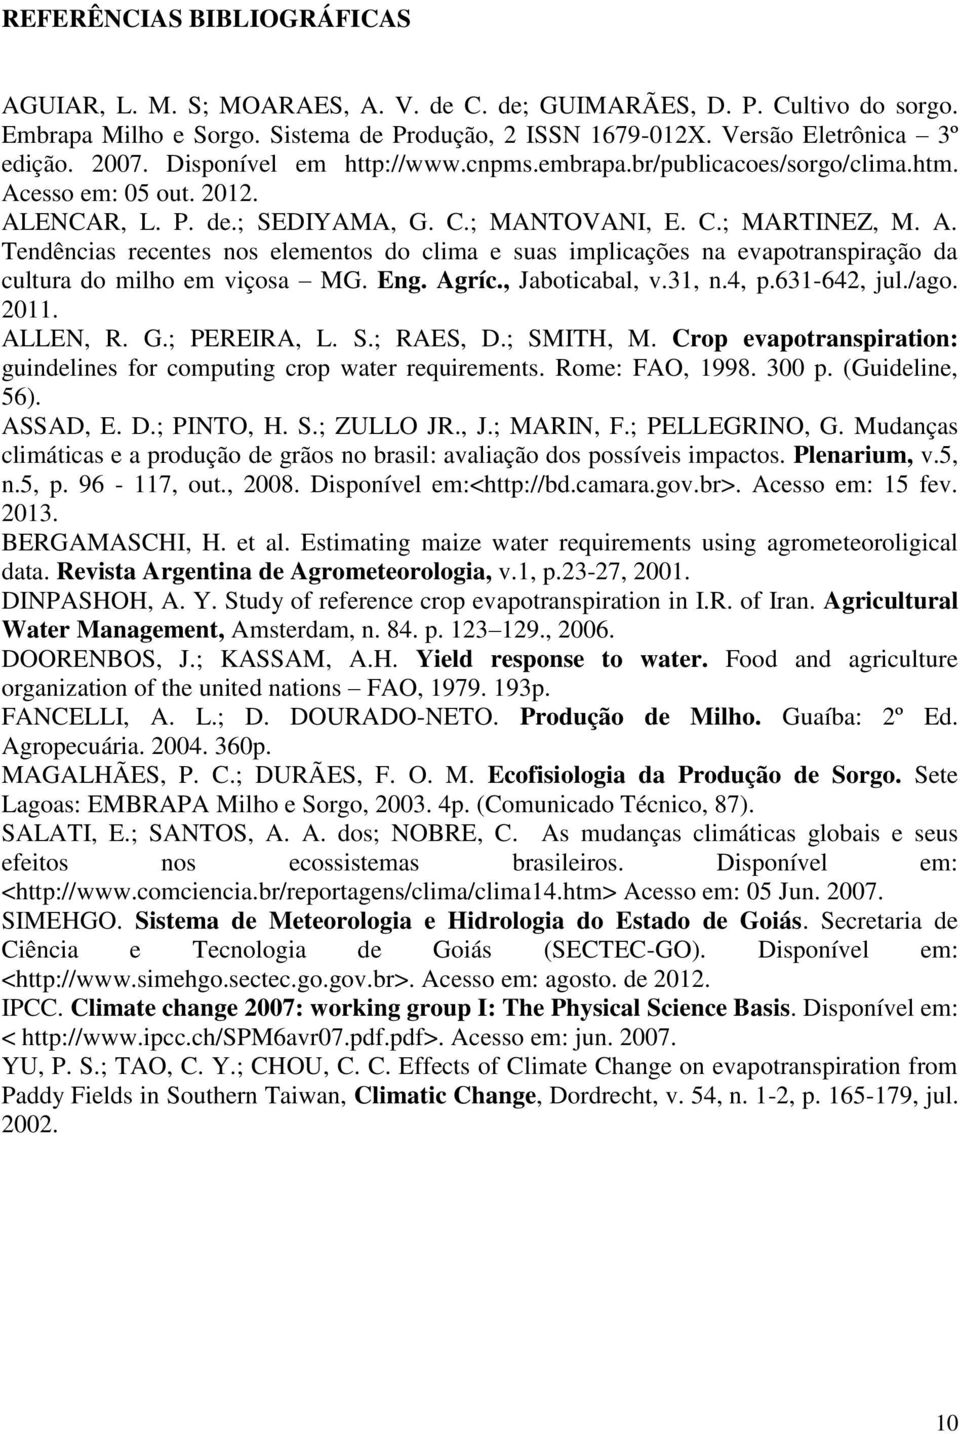 Eng. Agríc., Jaboticabal, v.31, n.4, p.631-642, jul./ago. 2011. ALLEN, R. G.; PEREIRA, L. S.; RAES, D.; SMITH, M. Crop evapotranspiration: guindelines for computing crop water requirements.